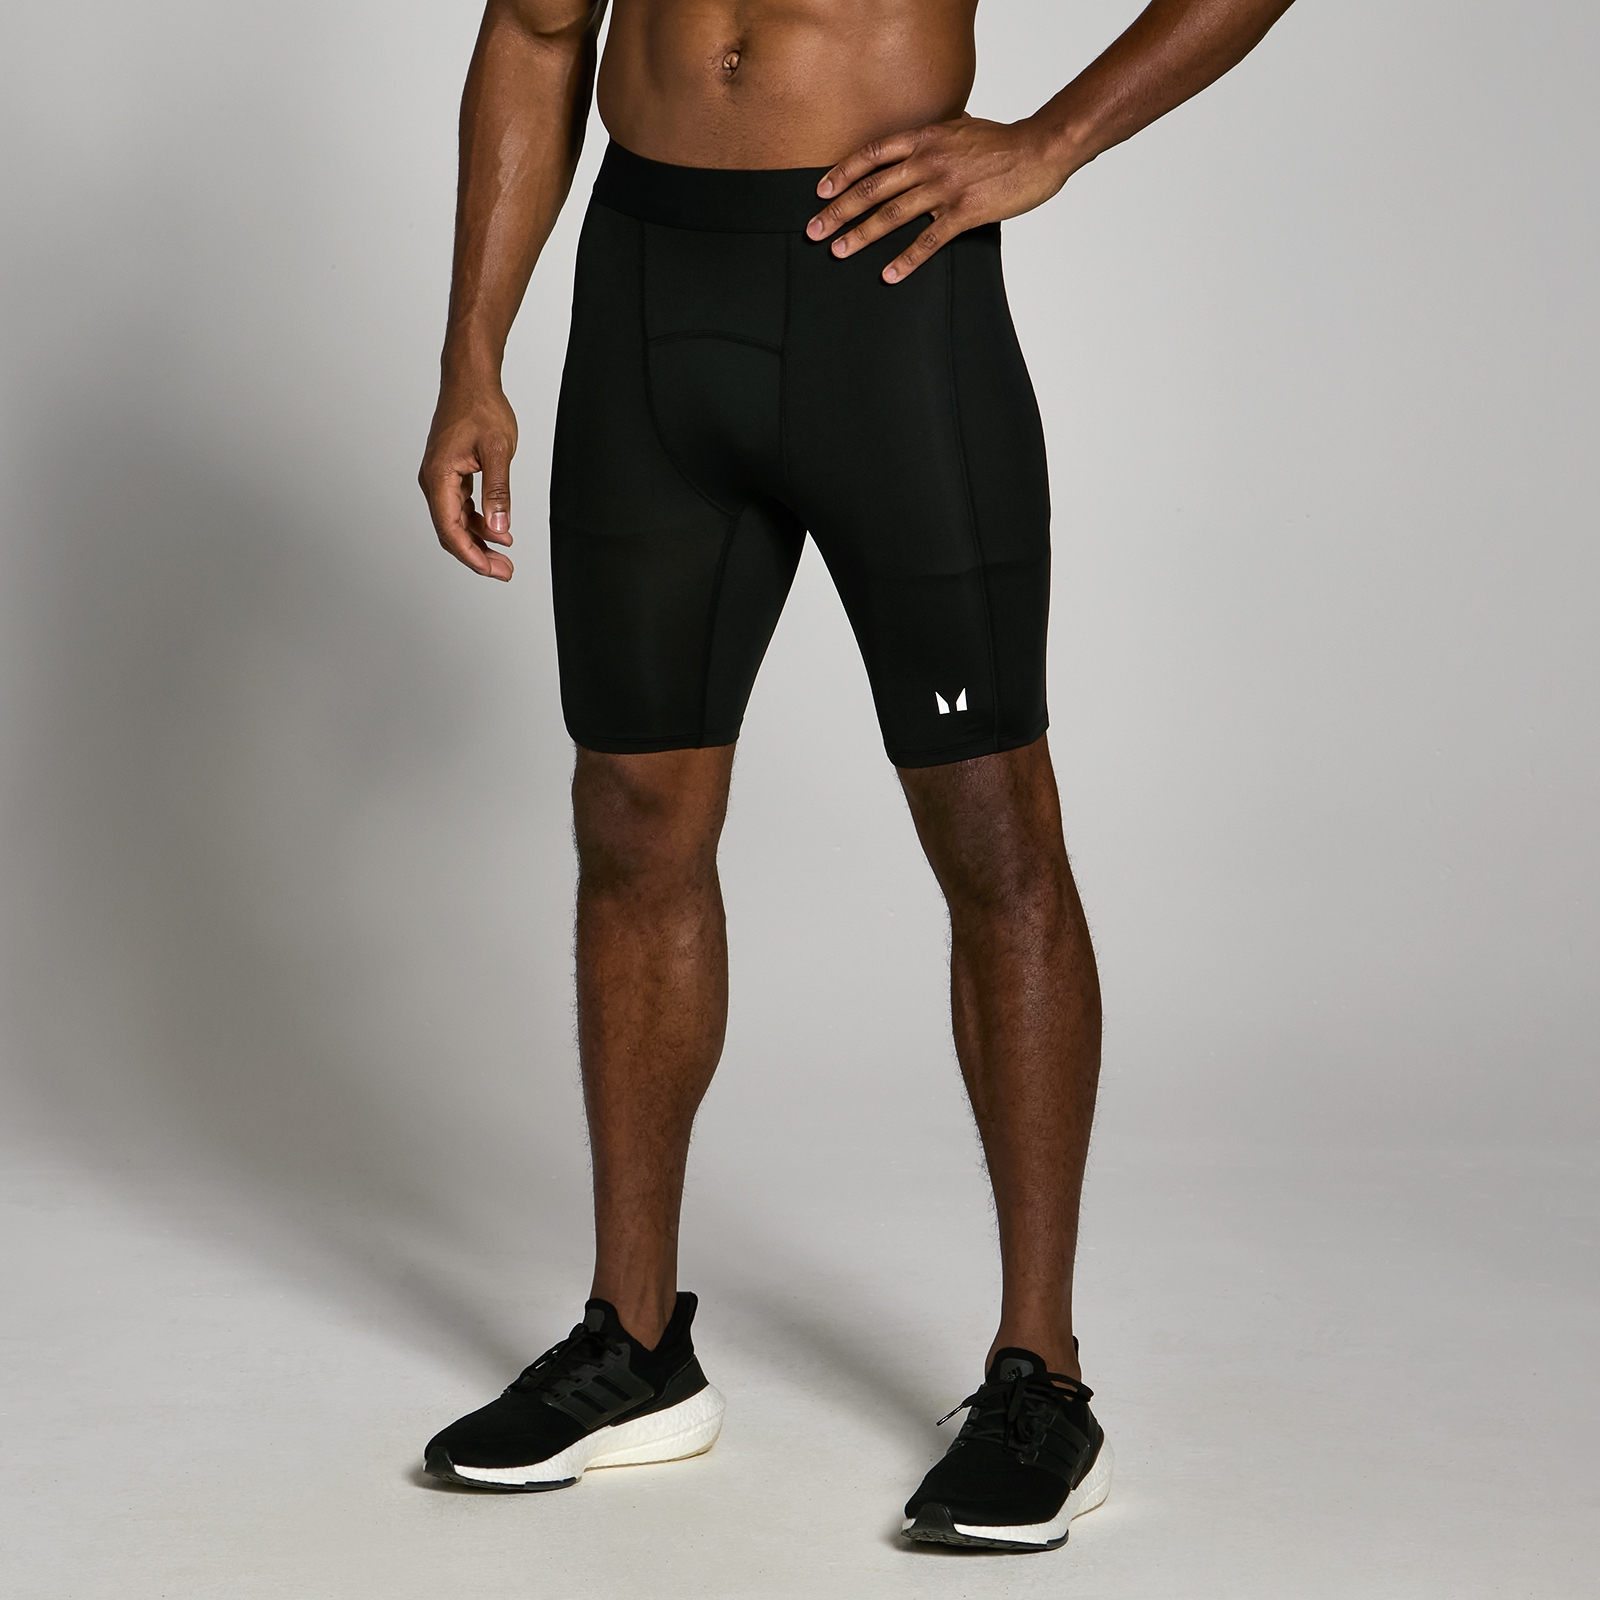 MP Men's Training Base Layer Shorts - Black - S von MP